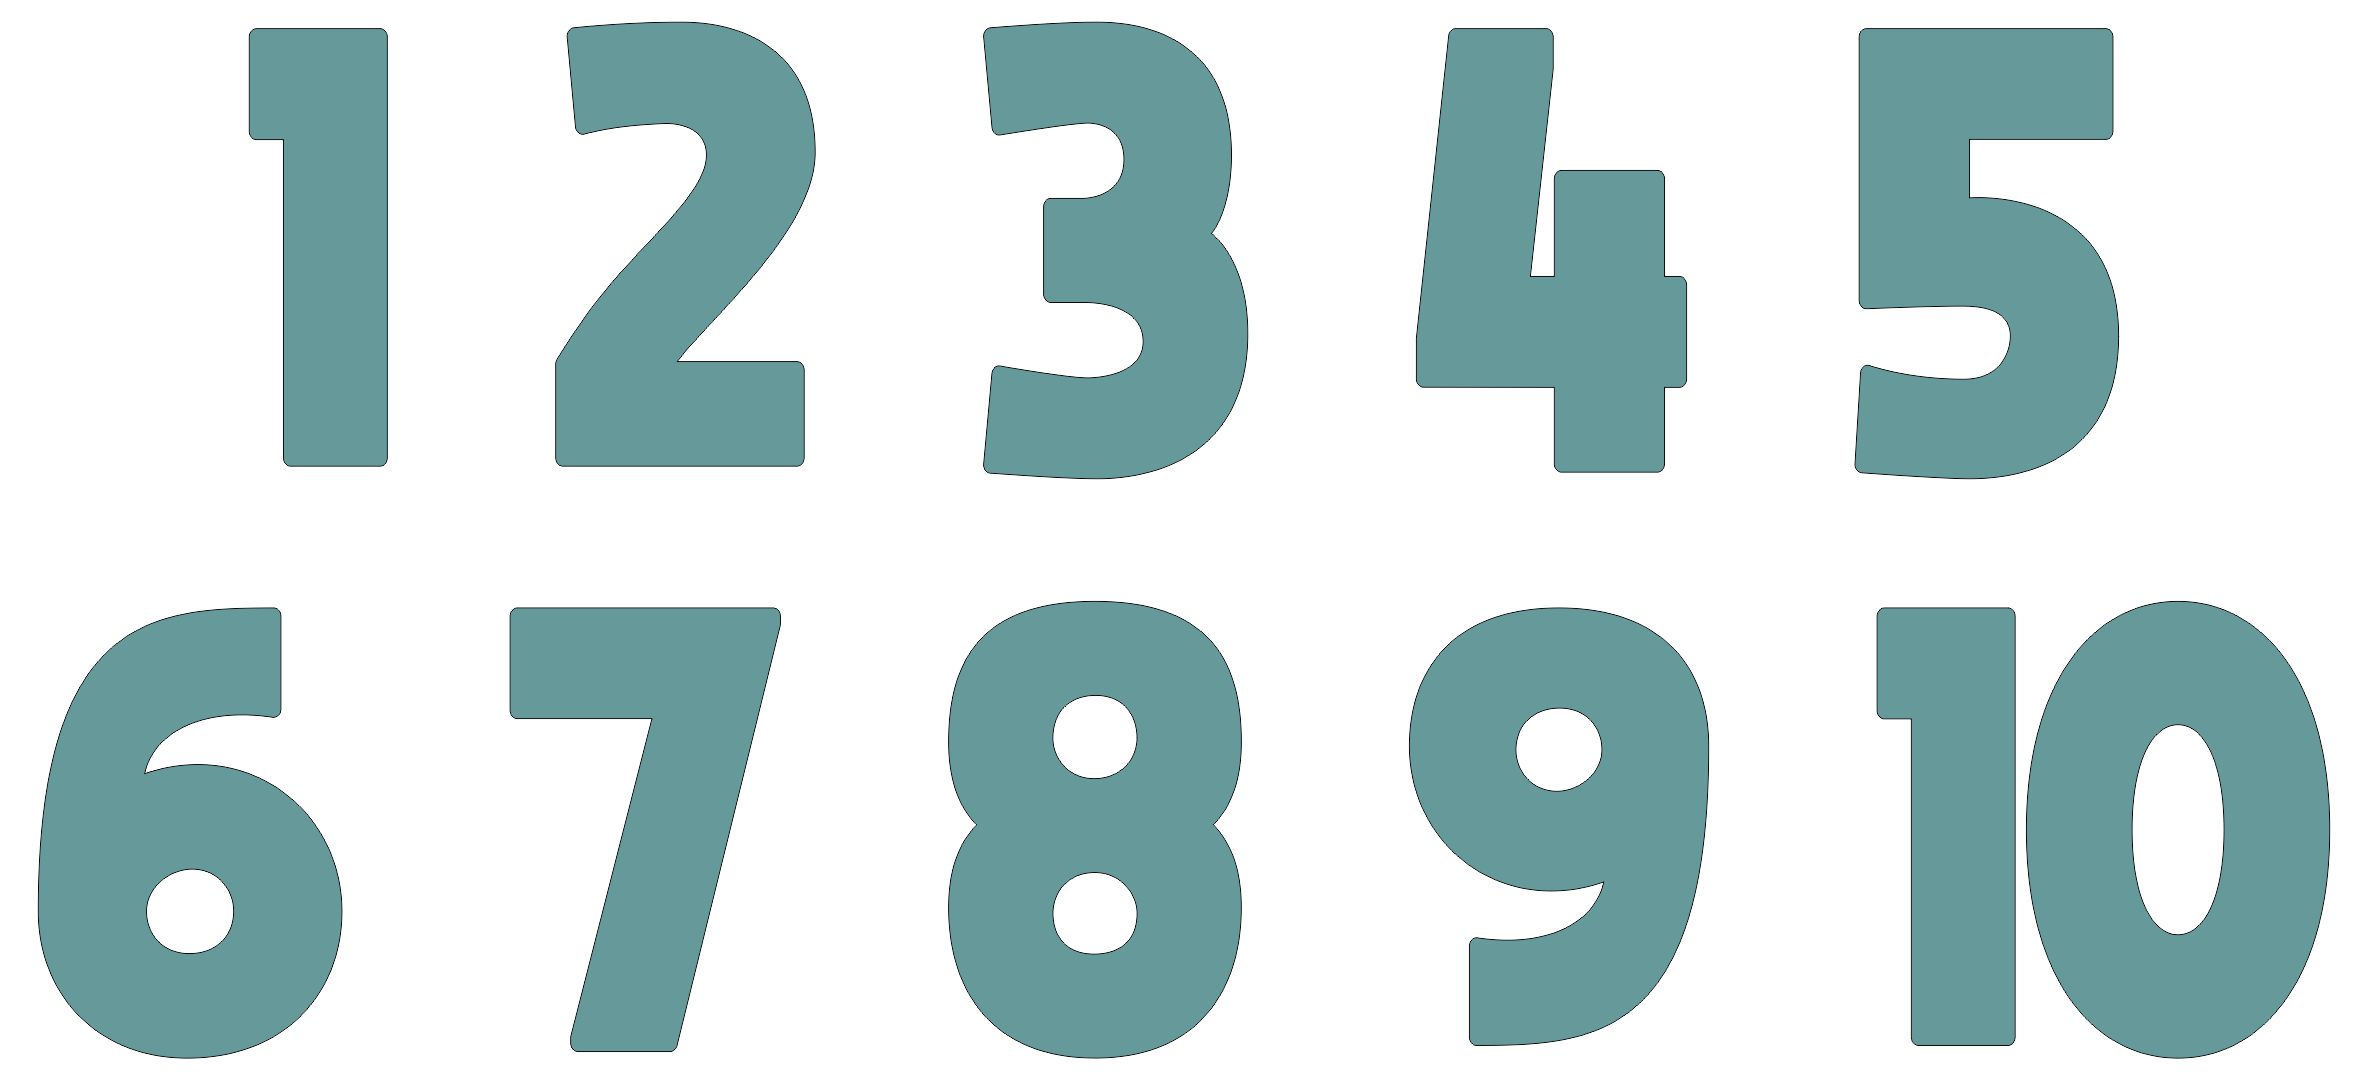 7-best-images-of-printable-number-2-free-printable-numbers-0-9-large-printable-numbers-1-10